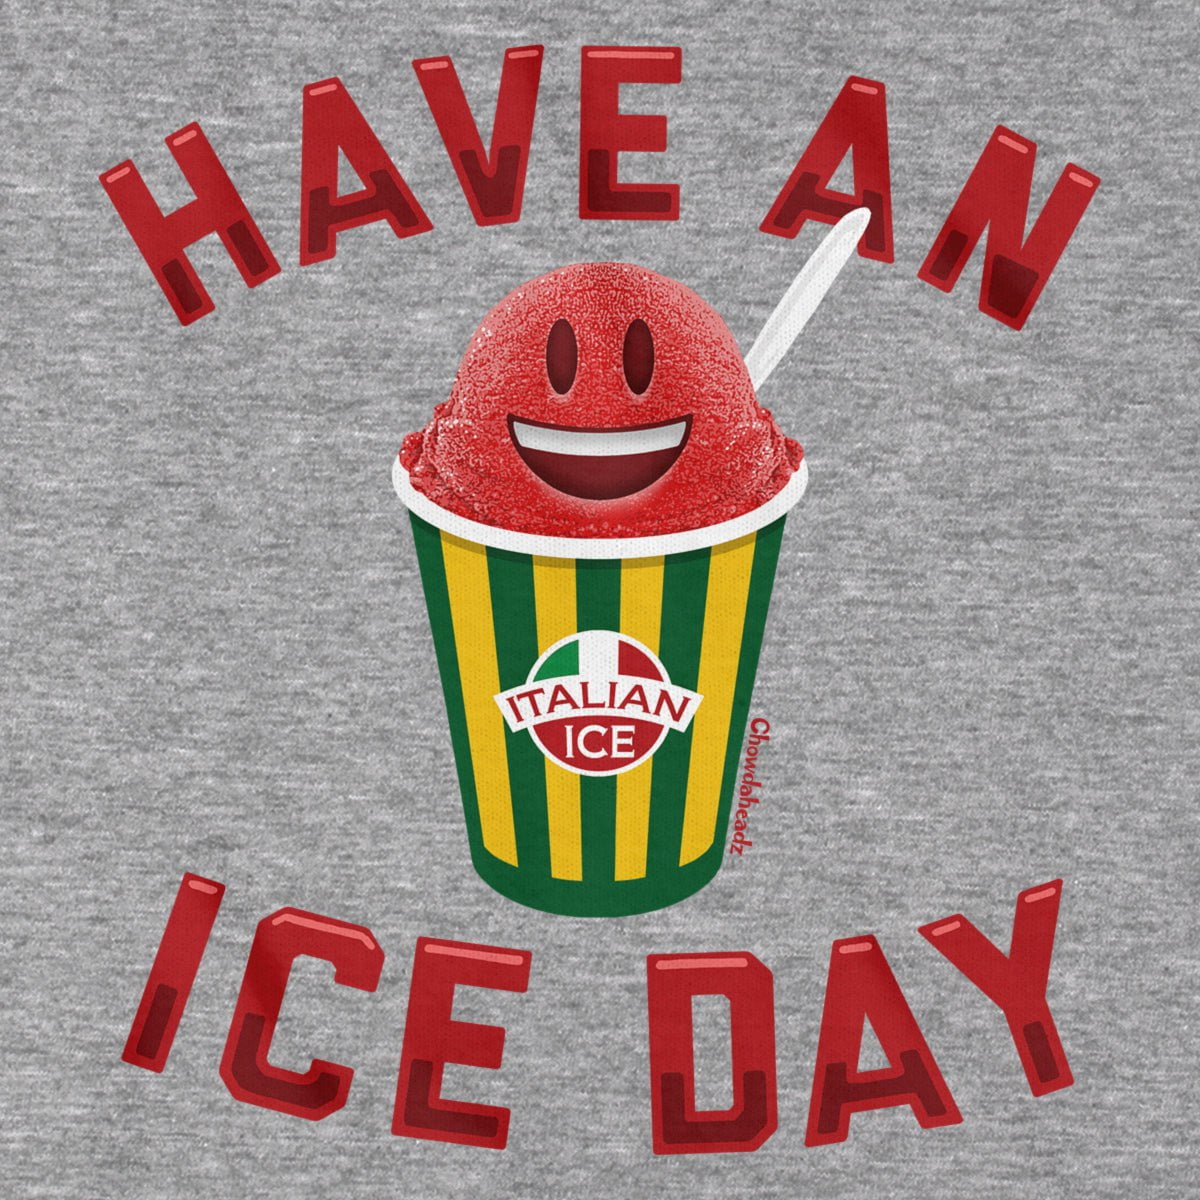 Have An Ice Day Italian Ice T-Shirt - Chowdaheadz